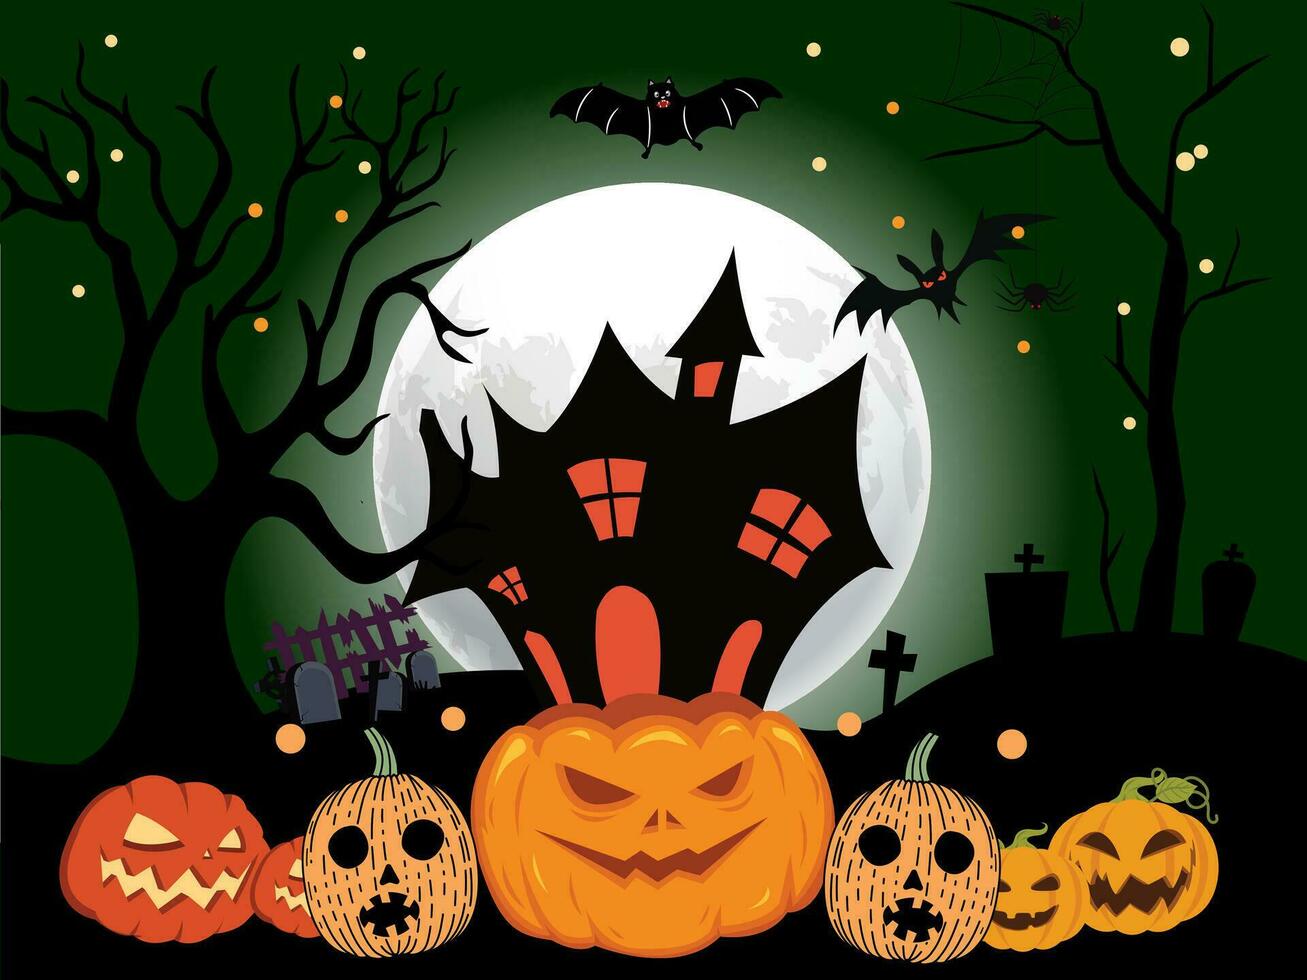 Halloween Tag Festival Symbole zum Banner, Karten, Flyer, Sozial Medien Tapeten, usw. Halloween Illustration. vektor